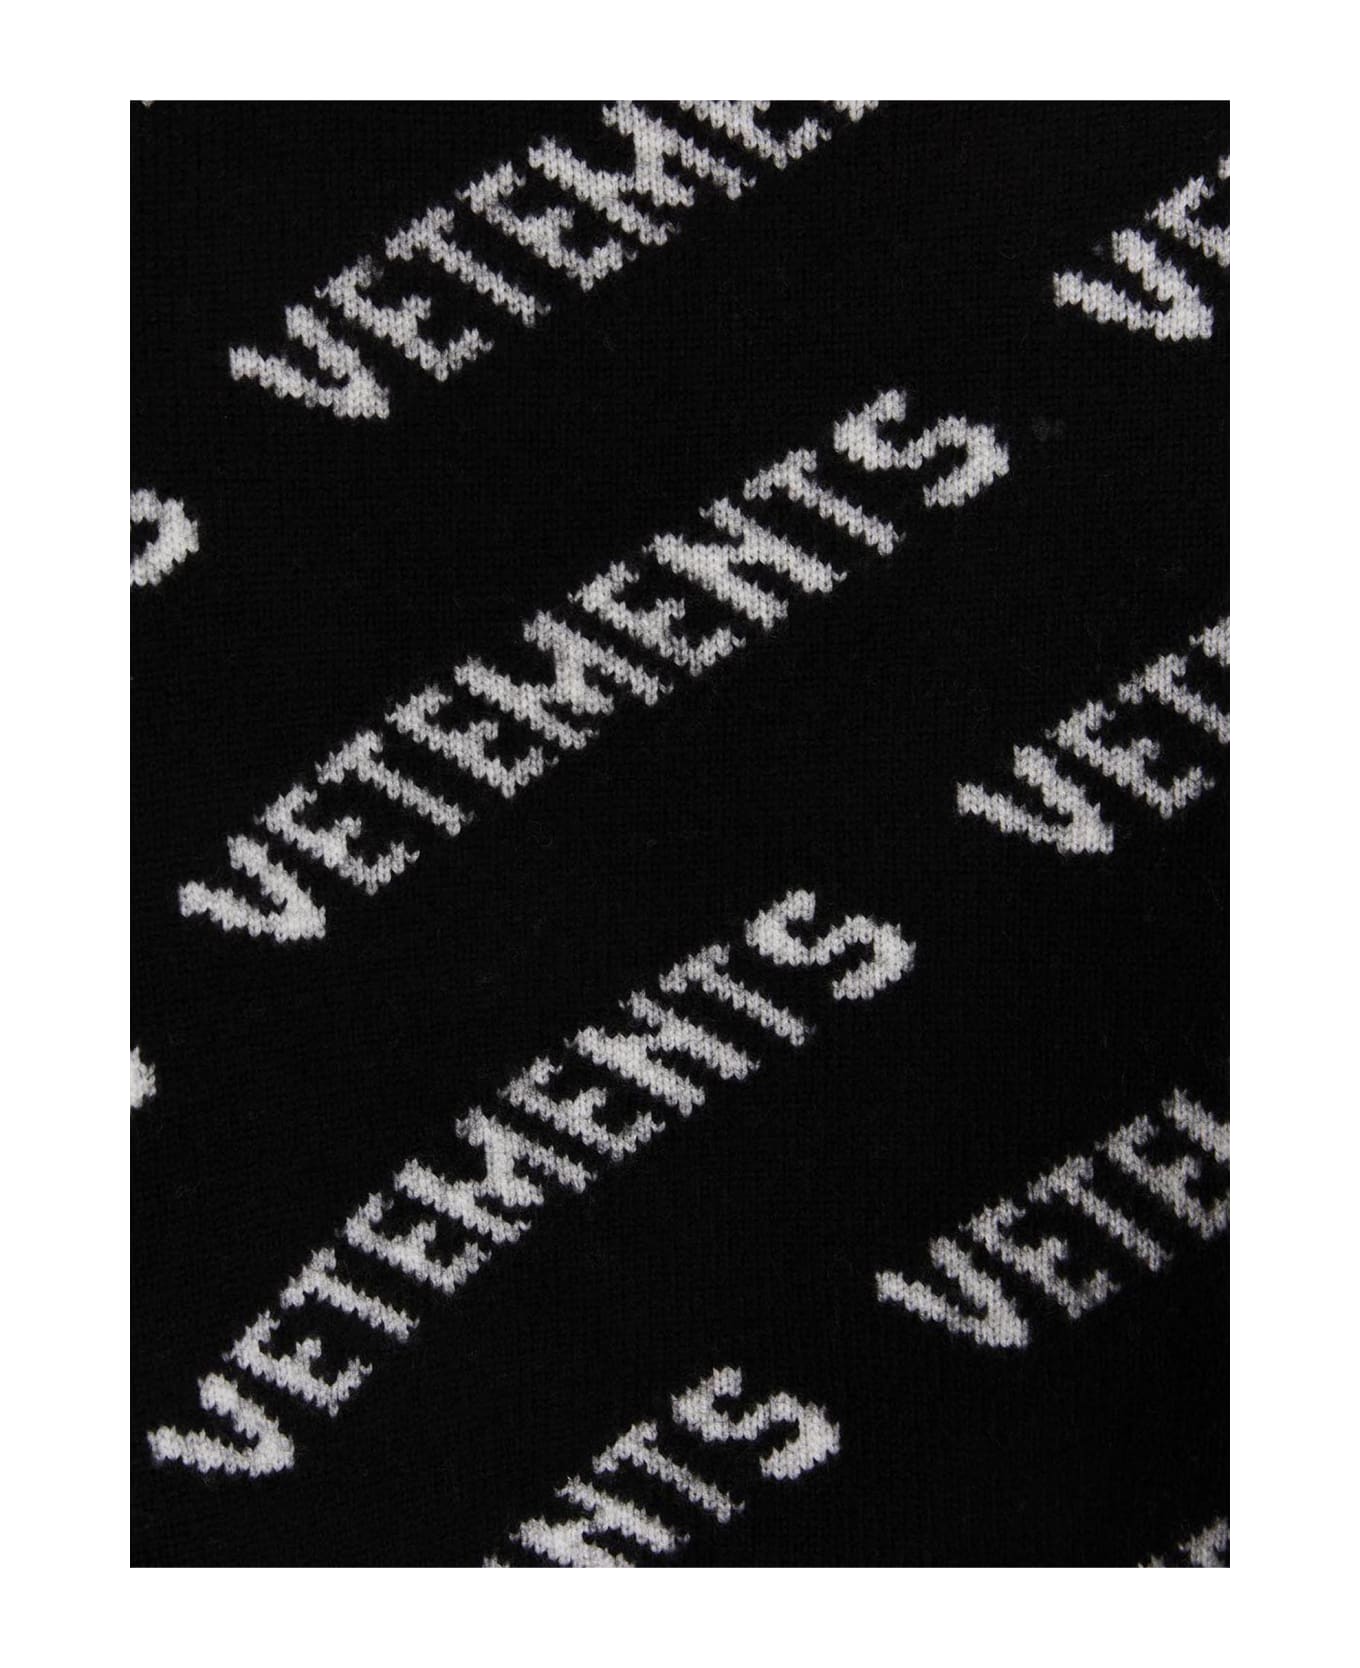 VETEMENTS All-over Logo Sweater - White/Black